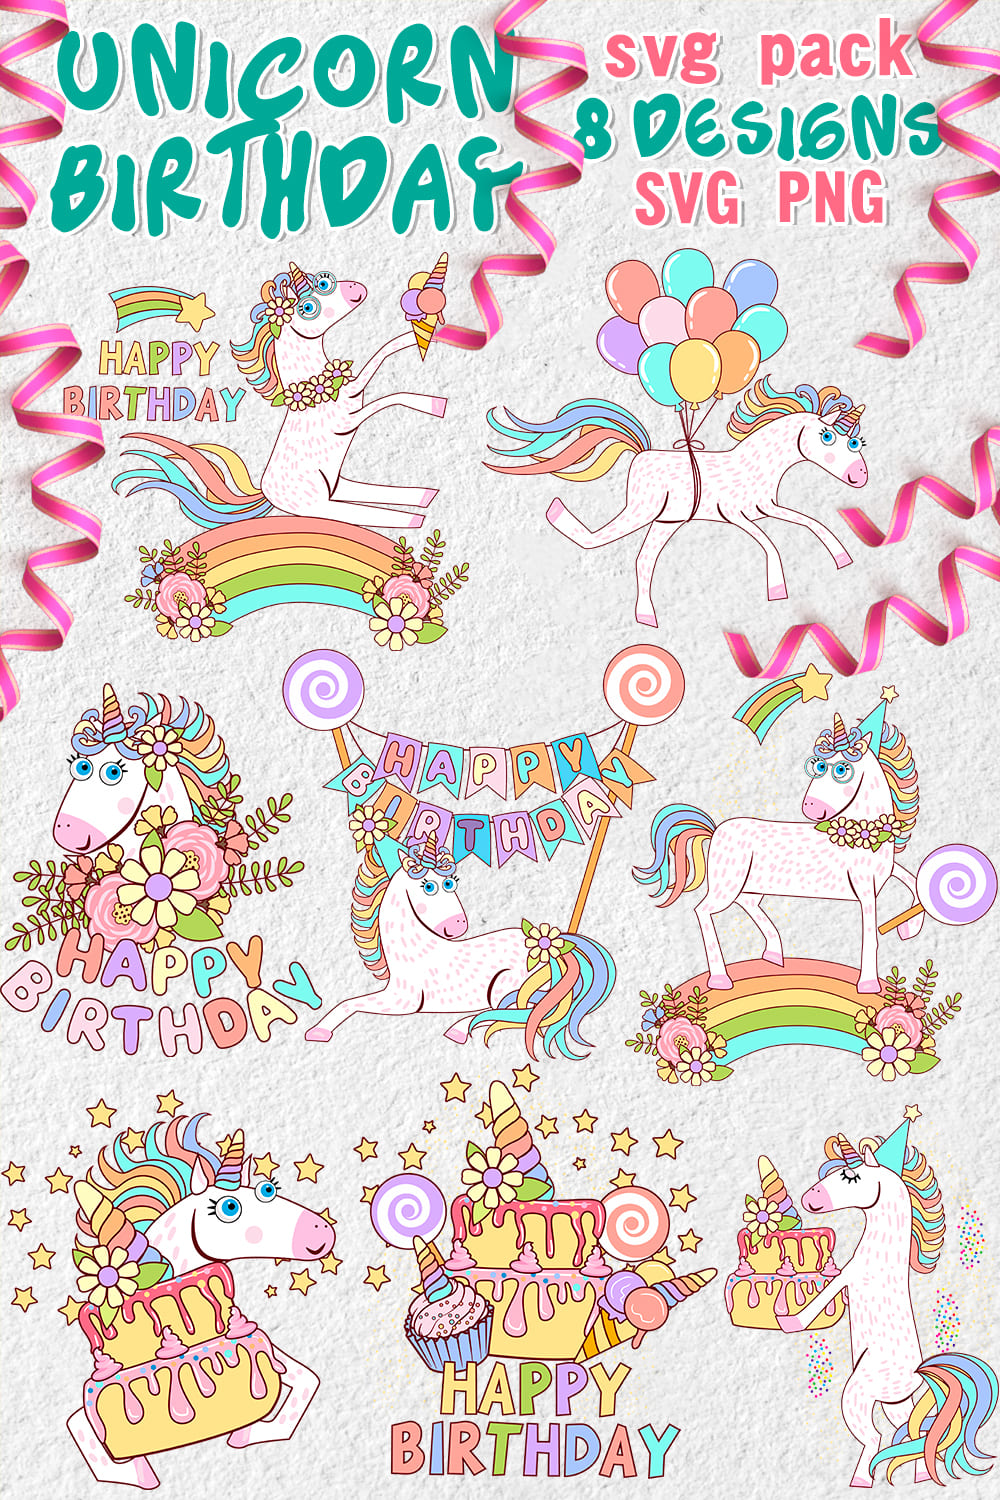 Unicorn Birthday SVG - pinterest image preview.